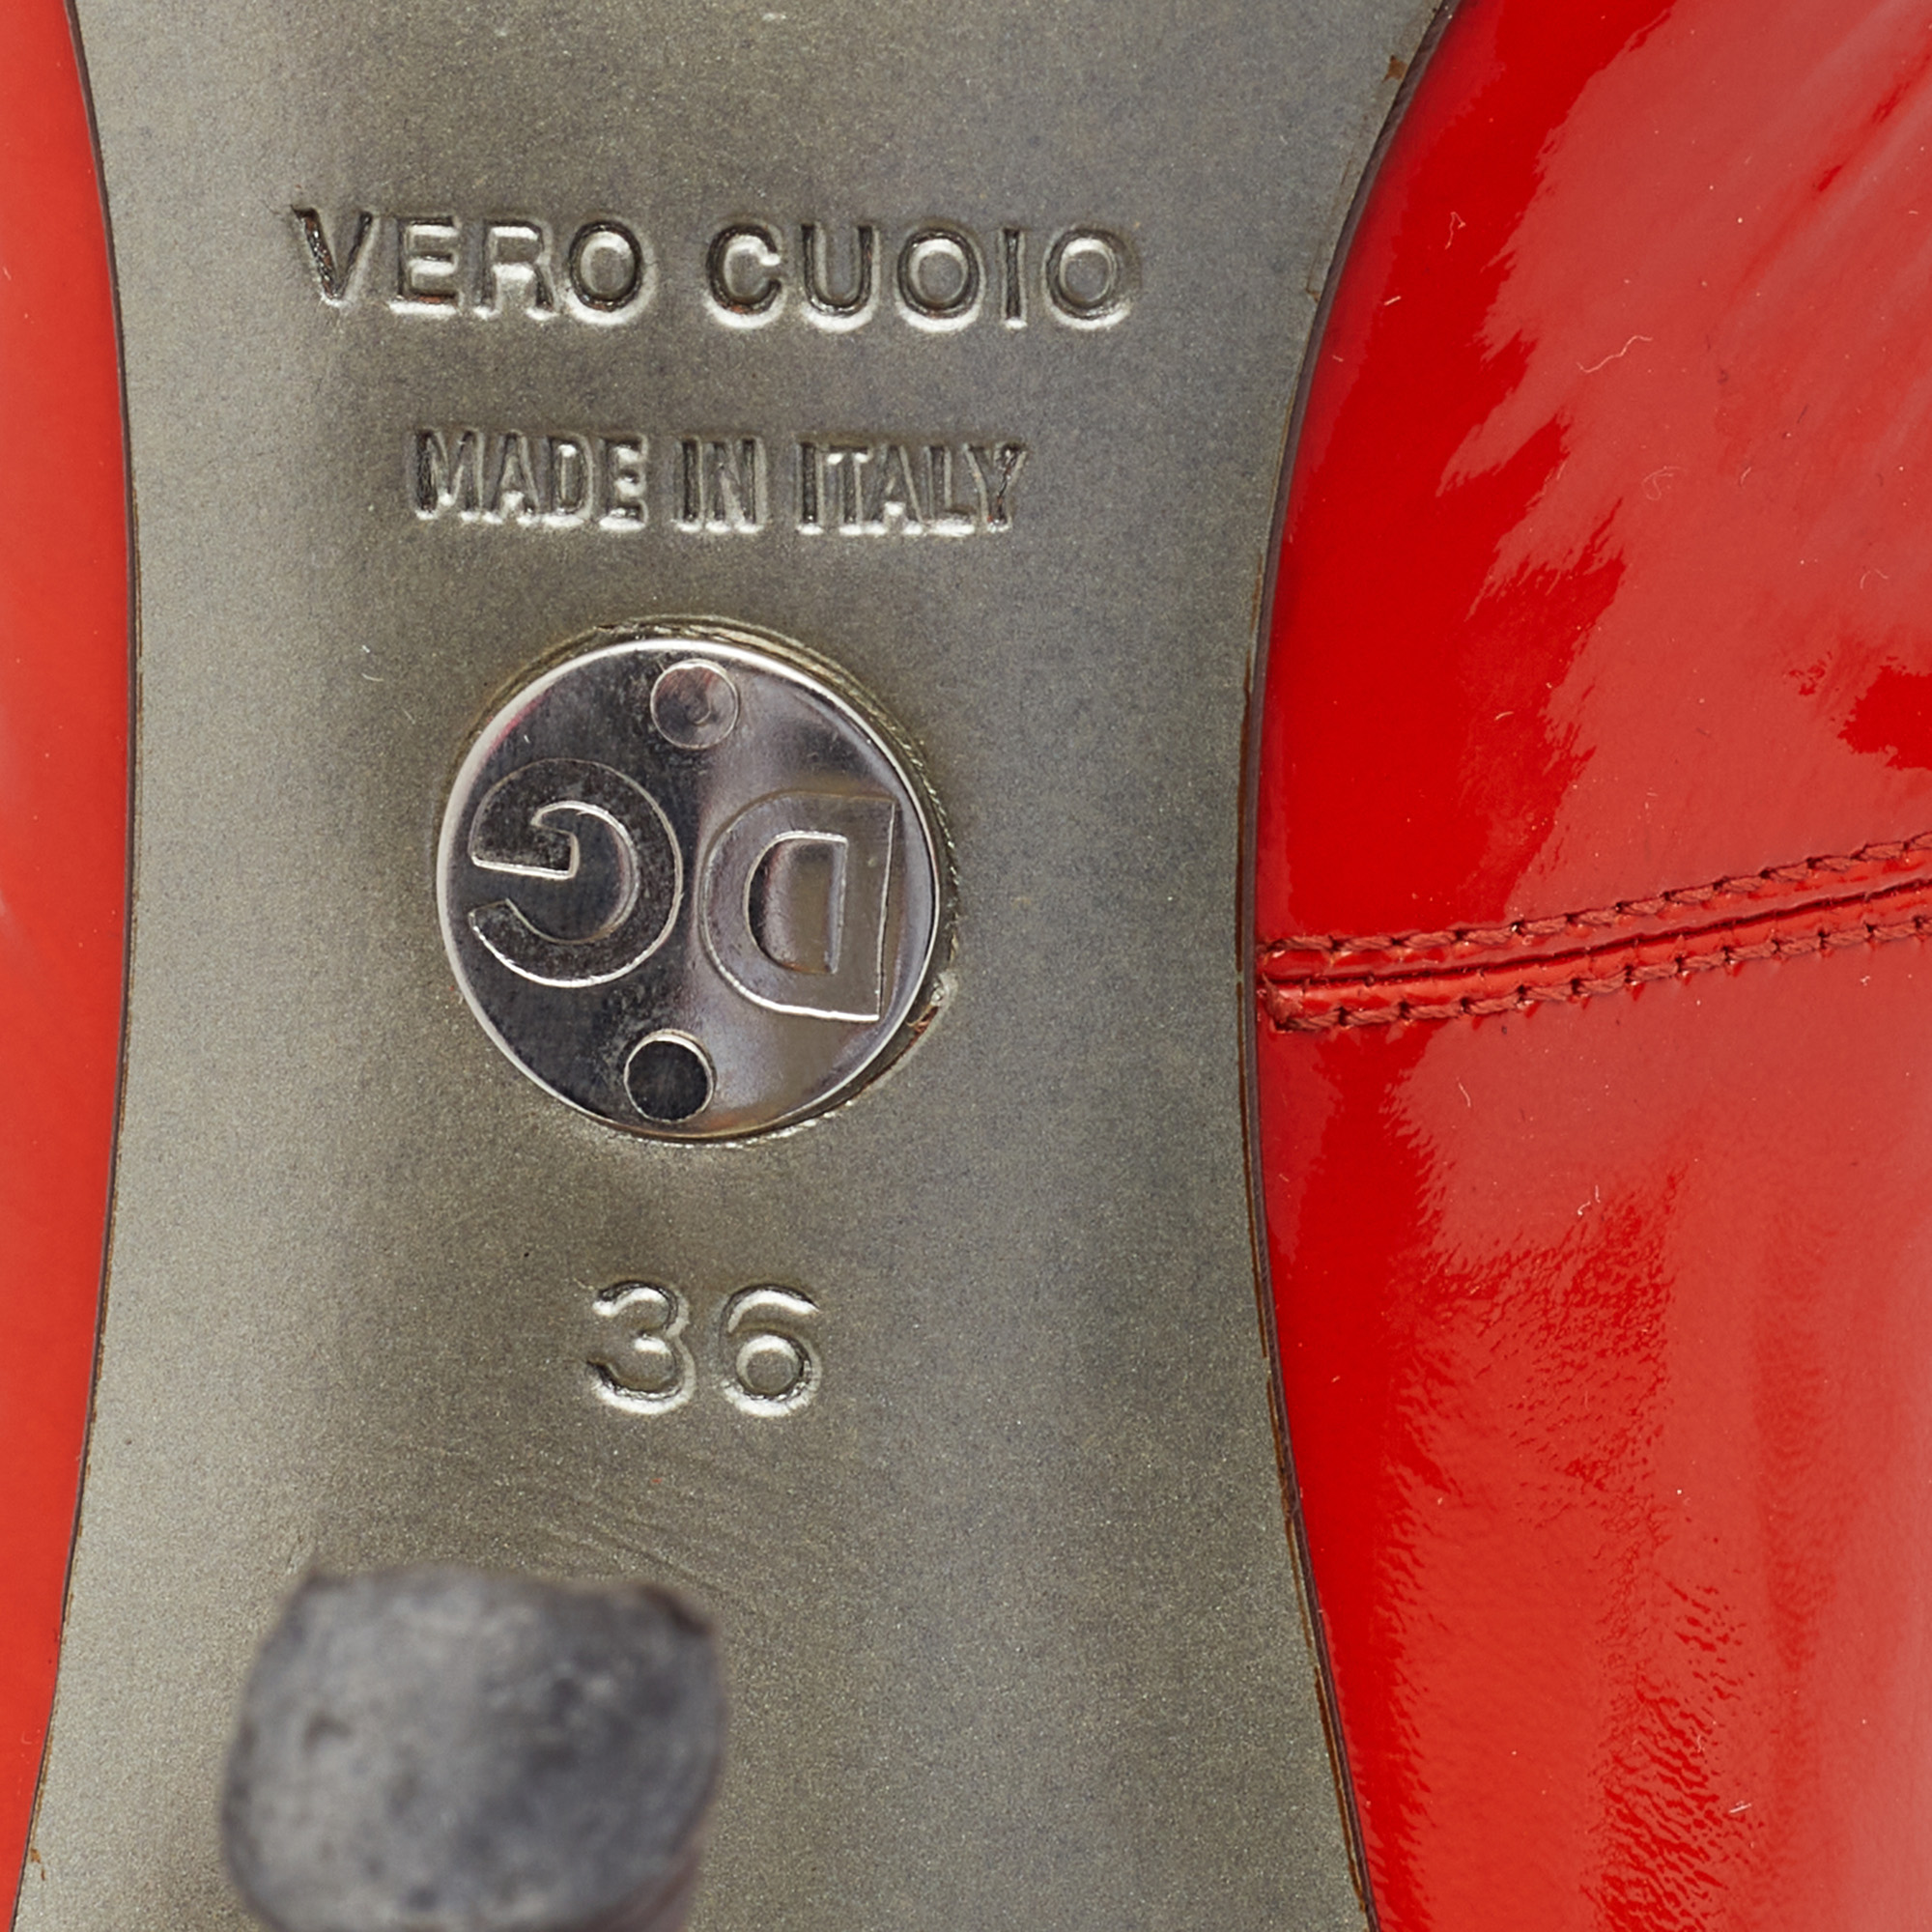 Dolce & Gabbana Orange Patent Leather Ankle Strap Sandals Size 36